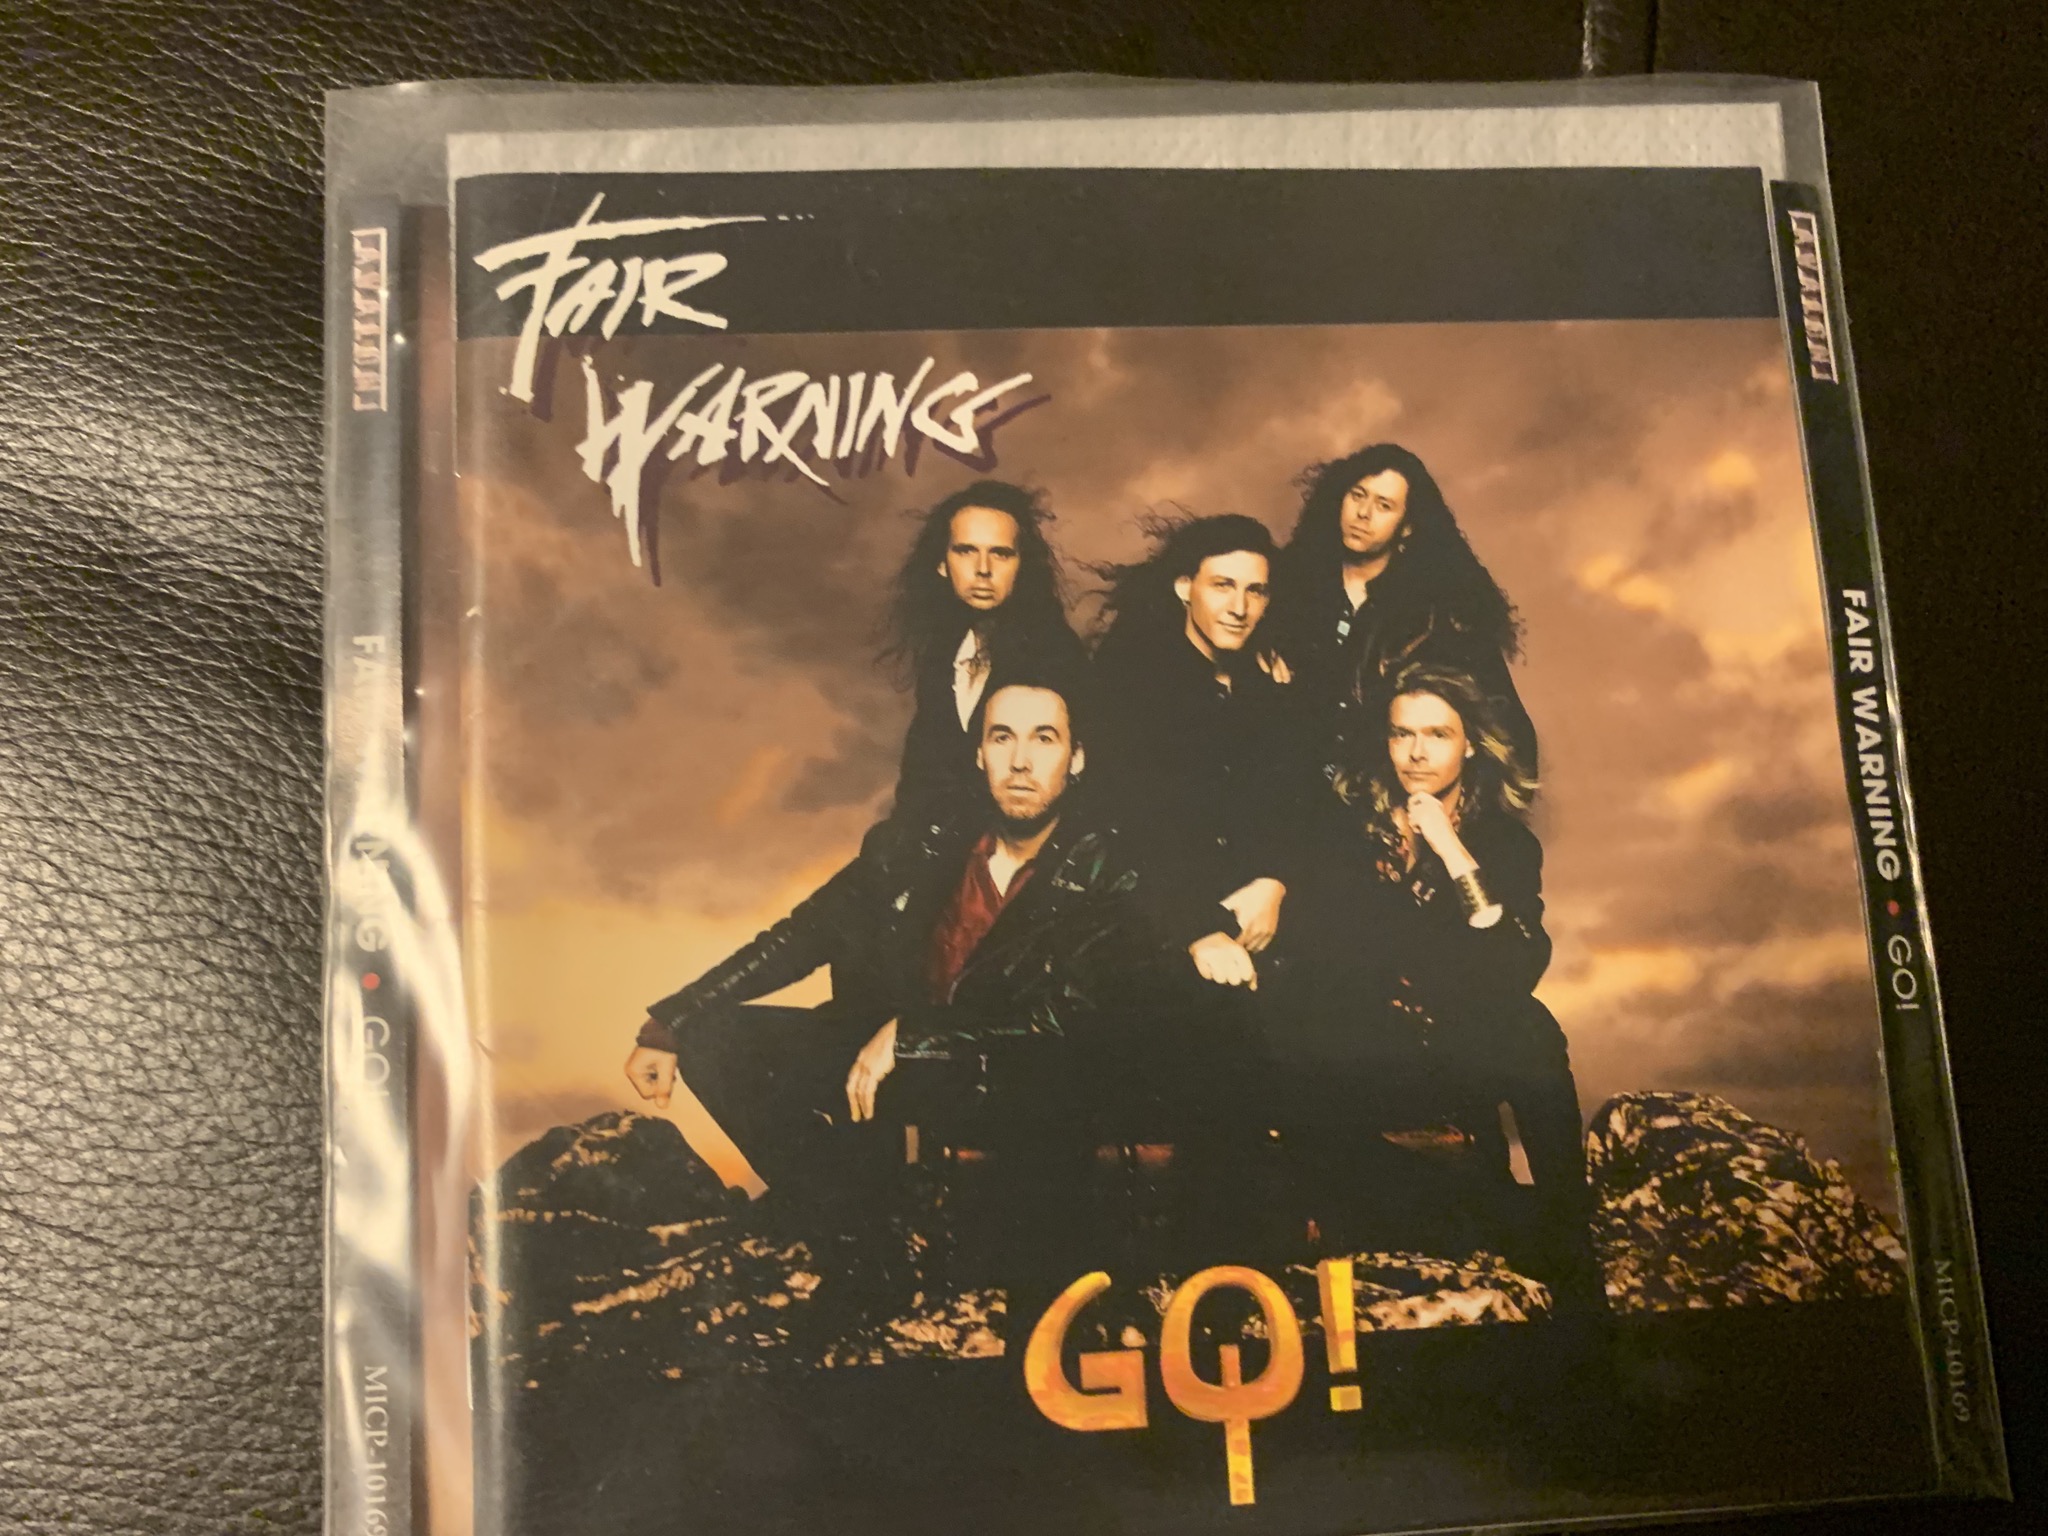 Fair Warningの3rdアルバム『Go!』を聴いた感想